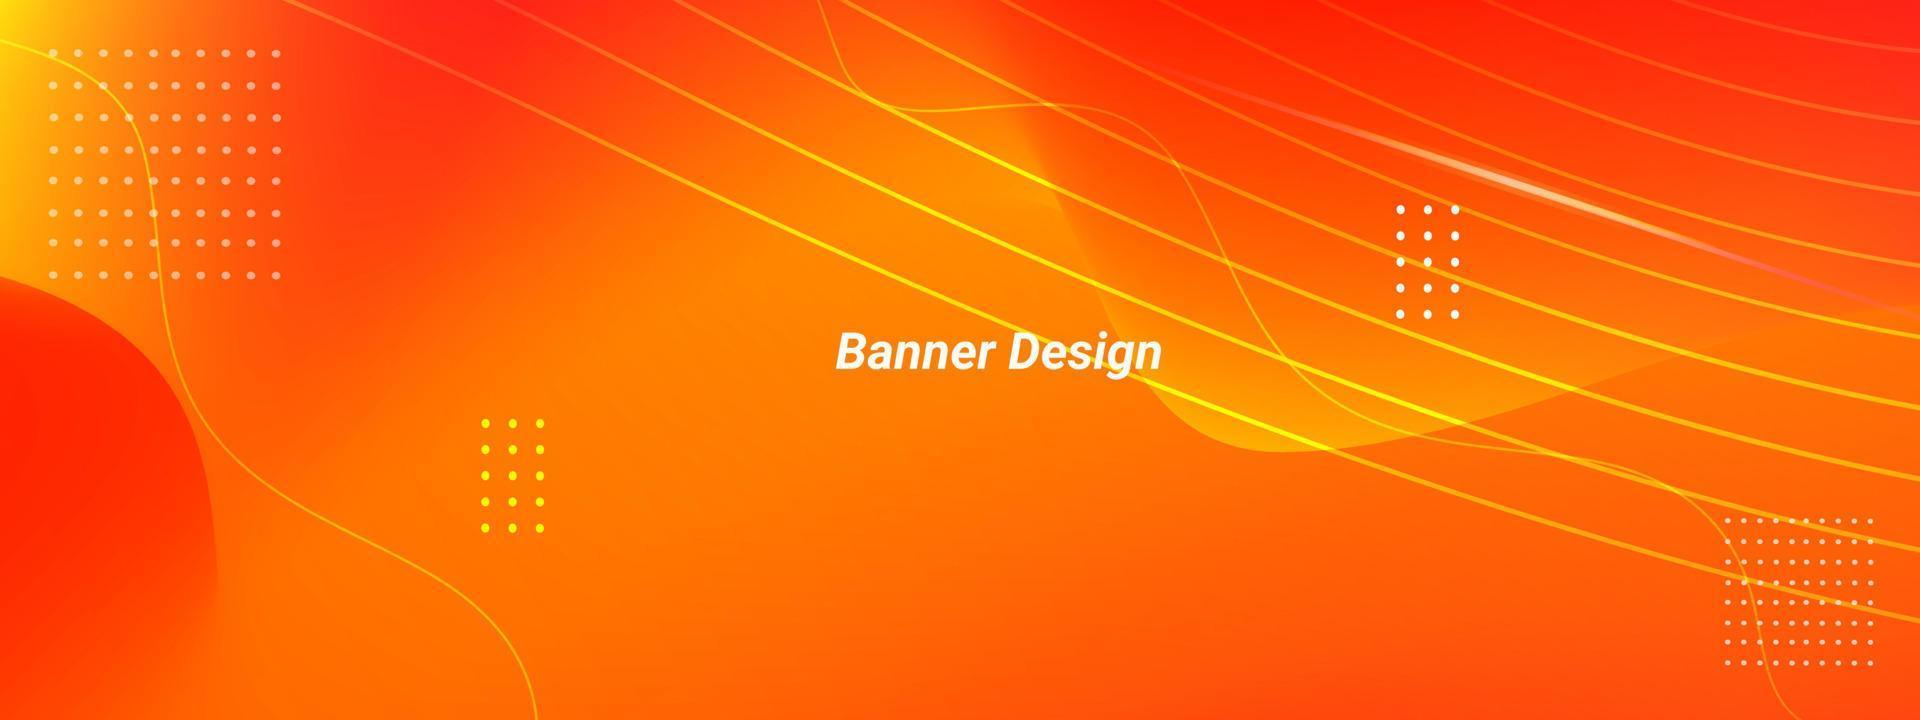 moderne stijlvolle rode abstracte geometrische elegante banner patroon achtergrond vector